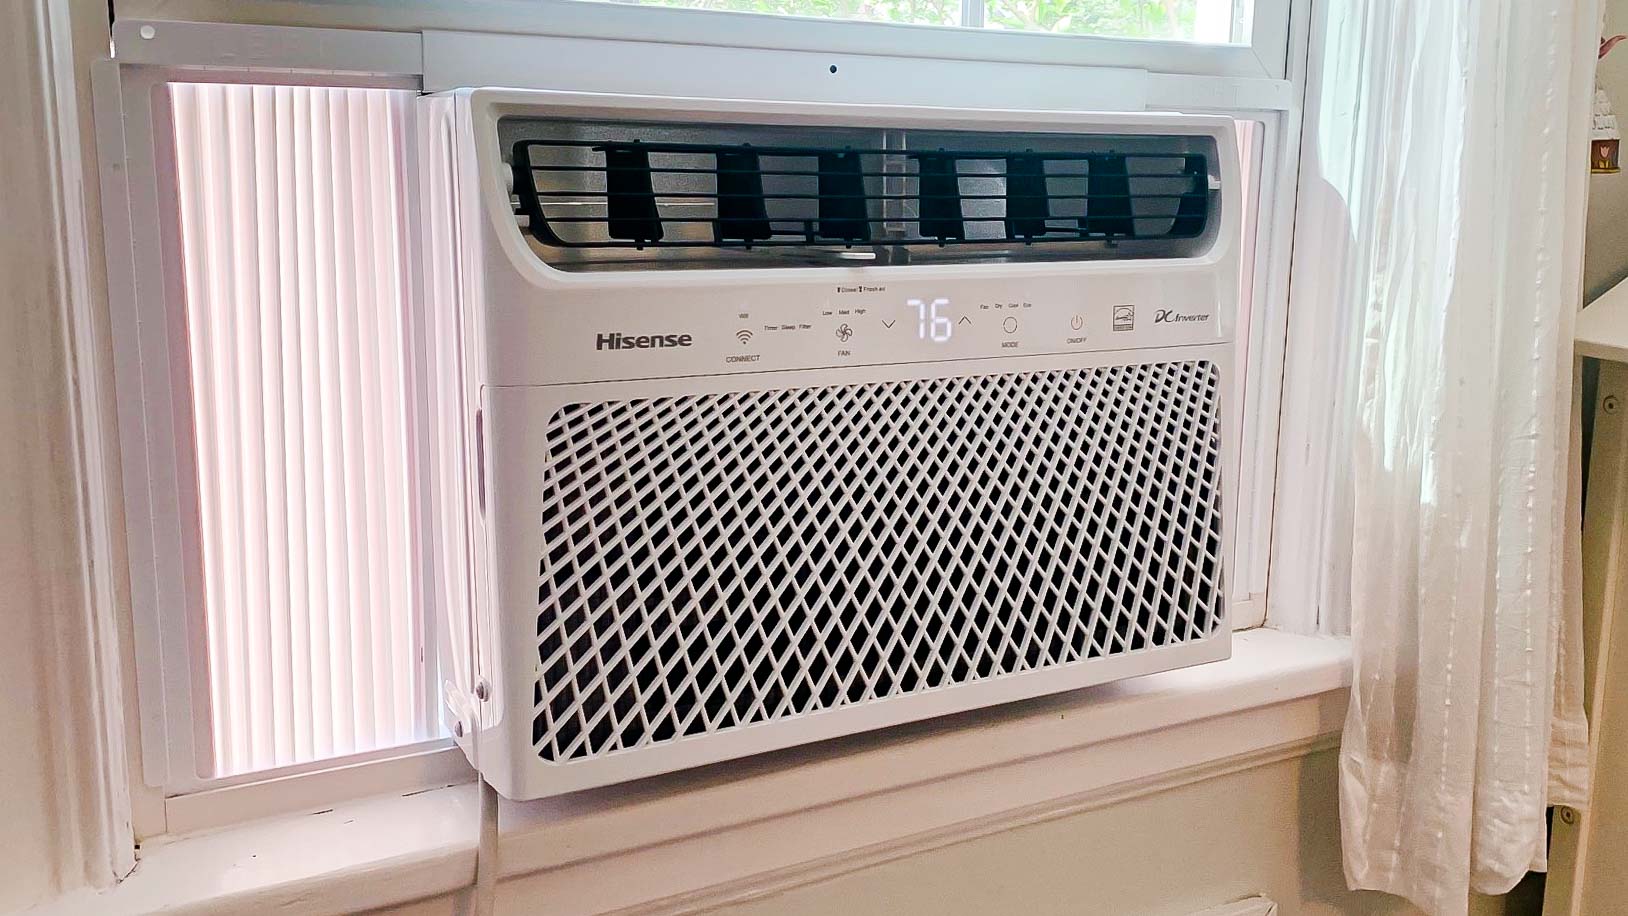 Hisense Smart Window Air Conditioner in Window